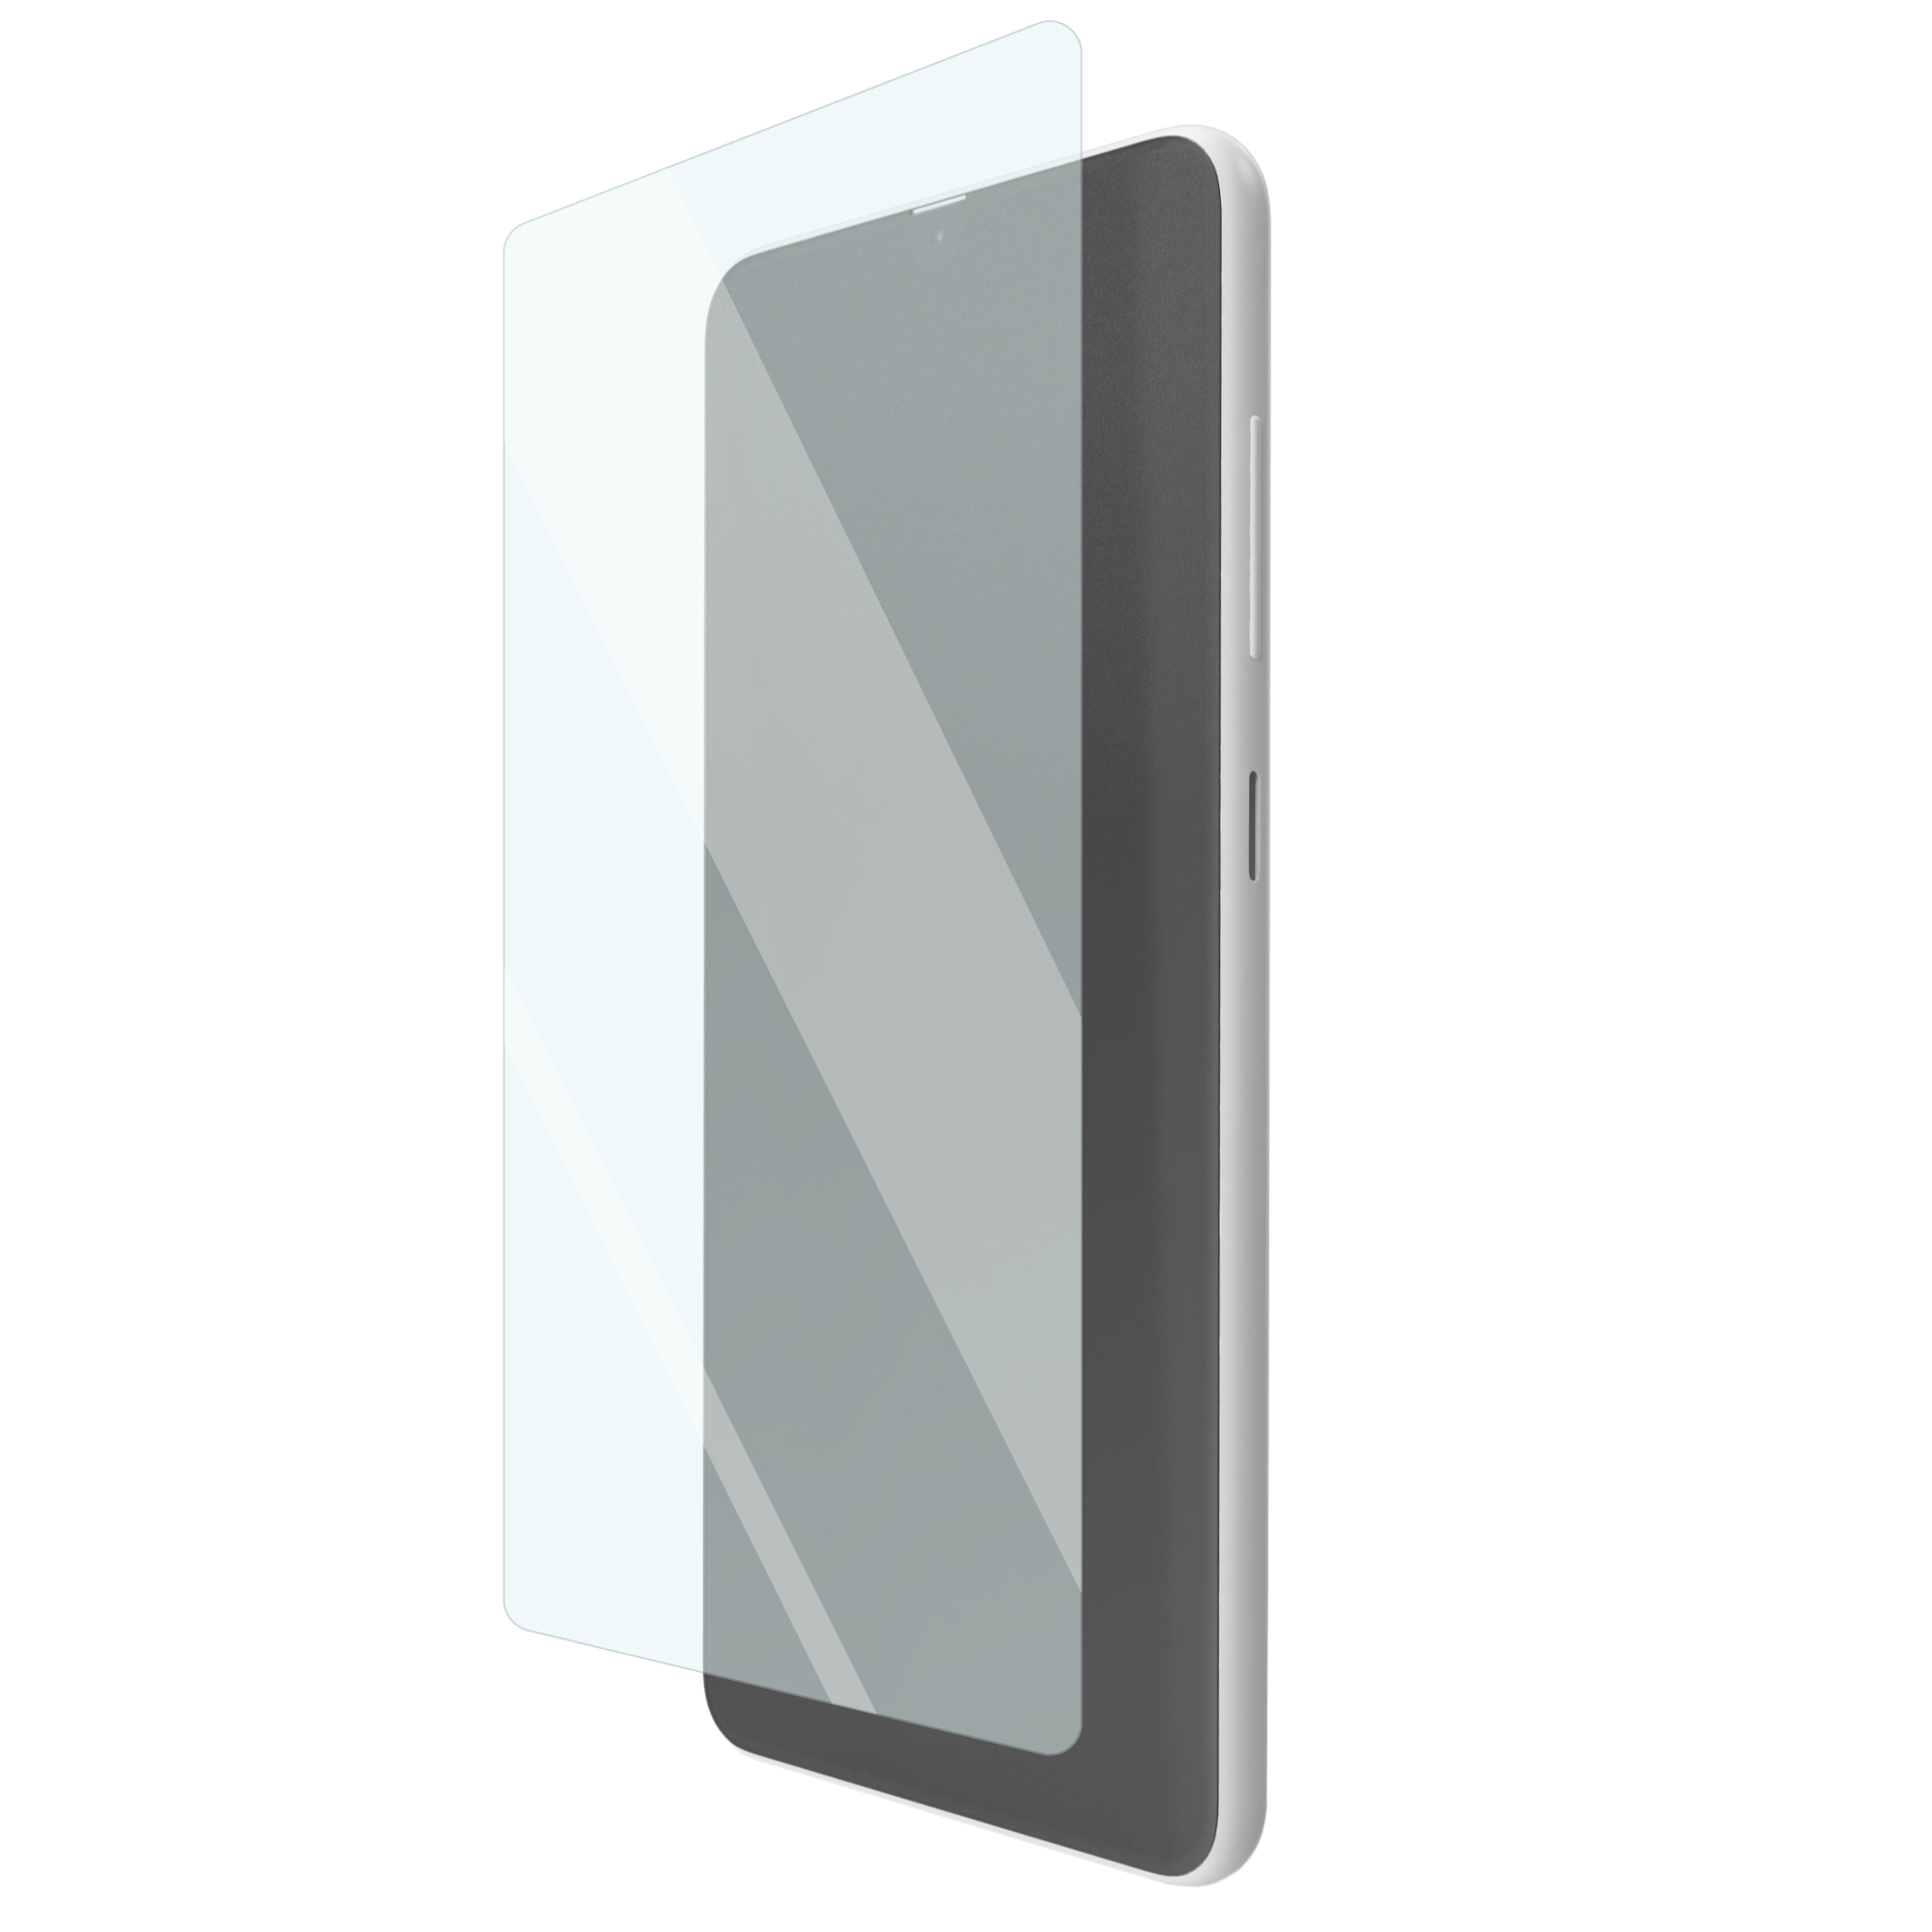 Folie de protectie silicon ShieldUP HiTech Regenerable pentru Coolpad X8 thumb